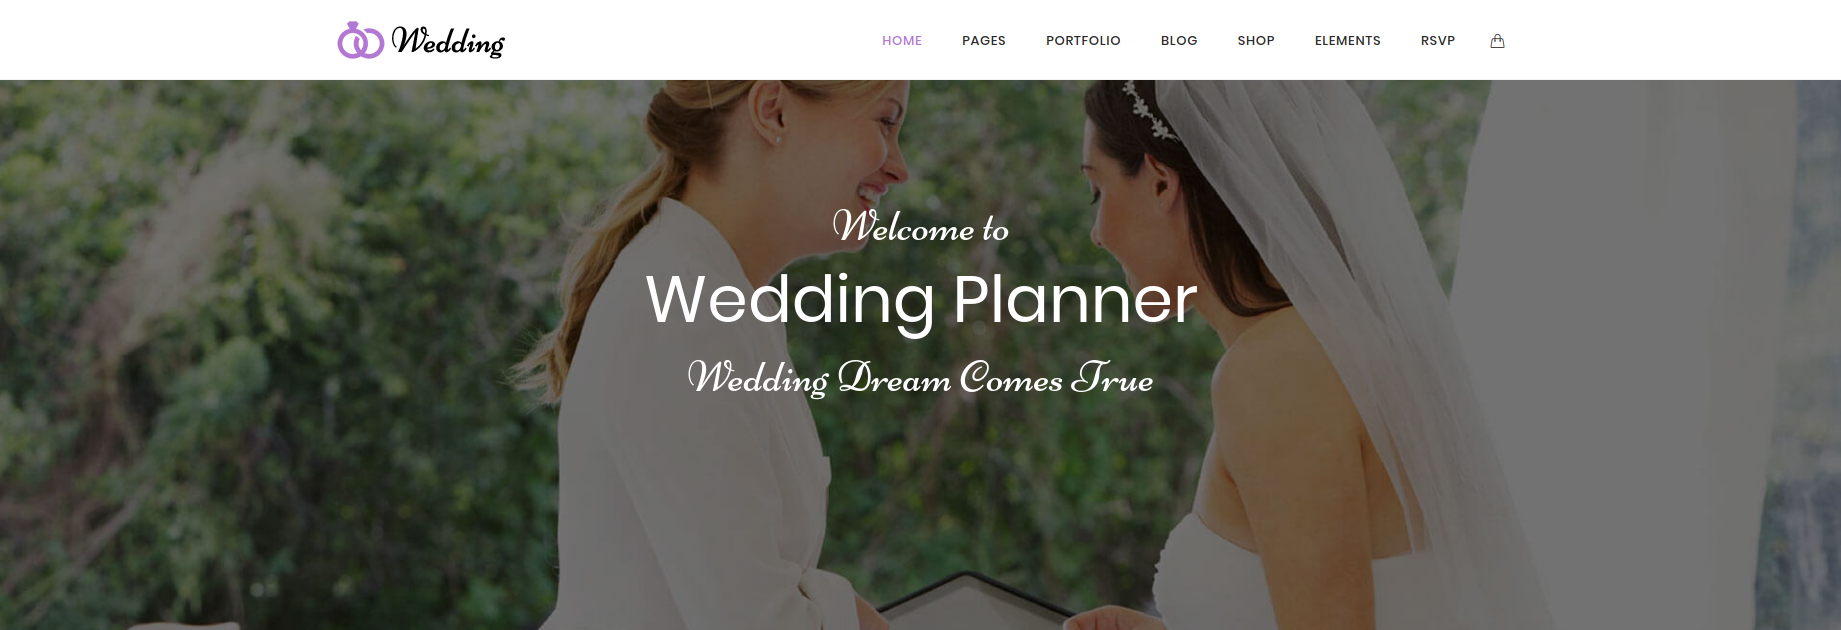 Wedding - Engagement & Marriage Planner WordPress Theme